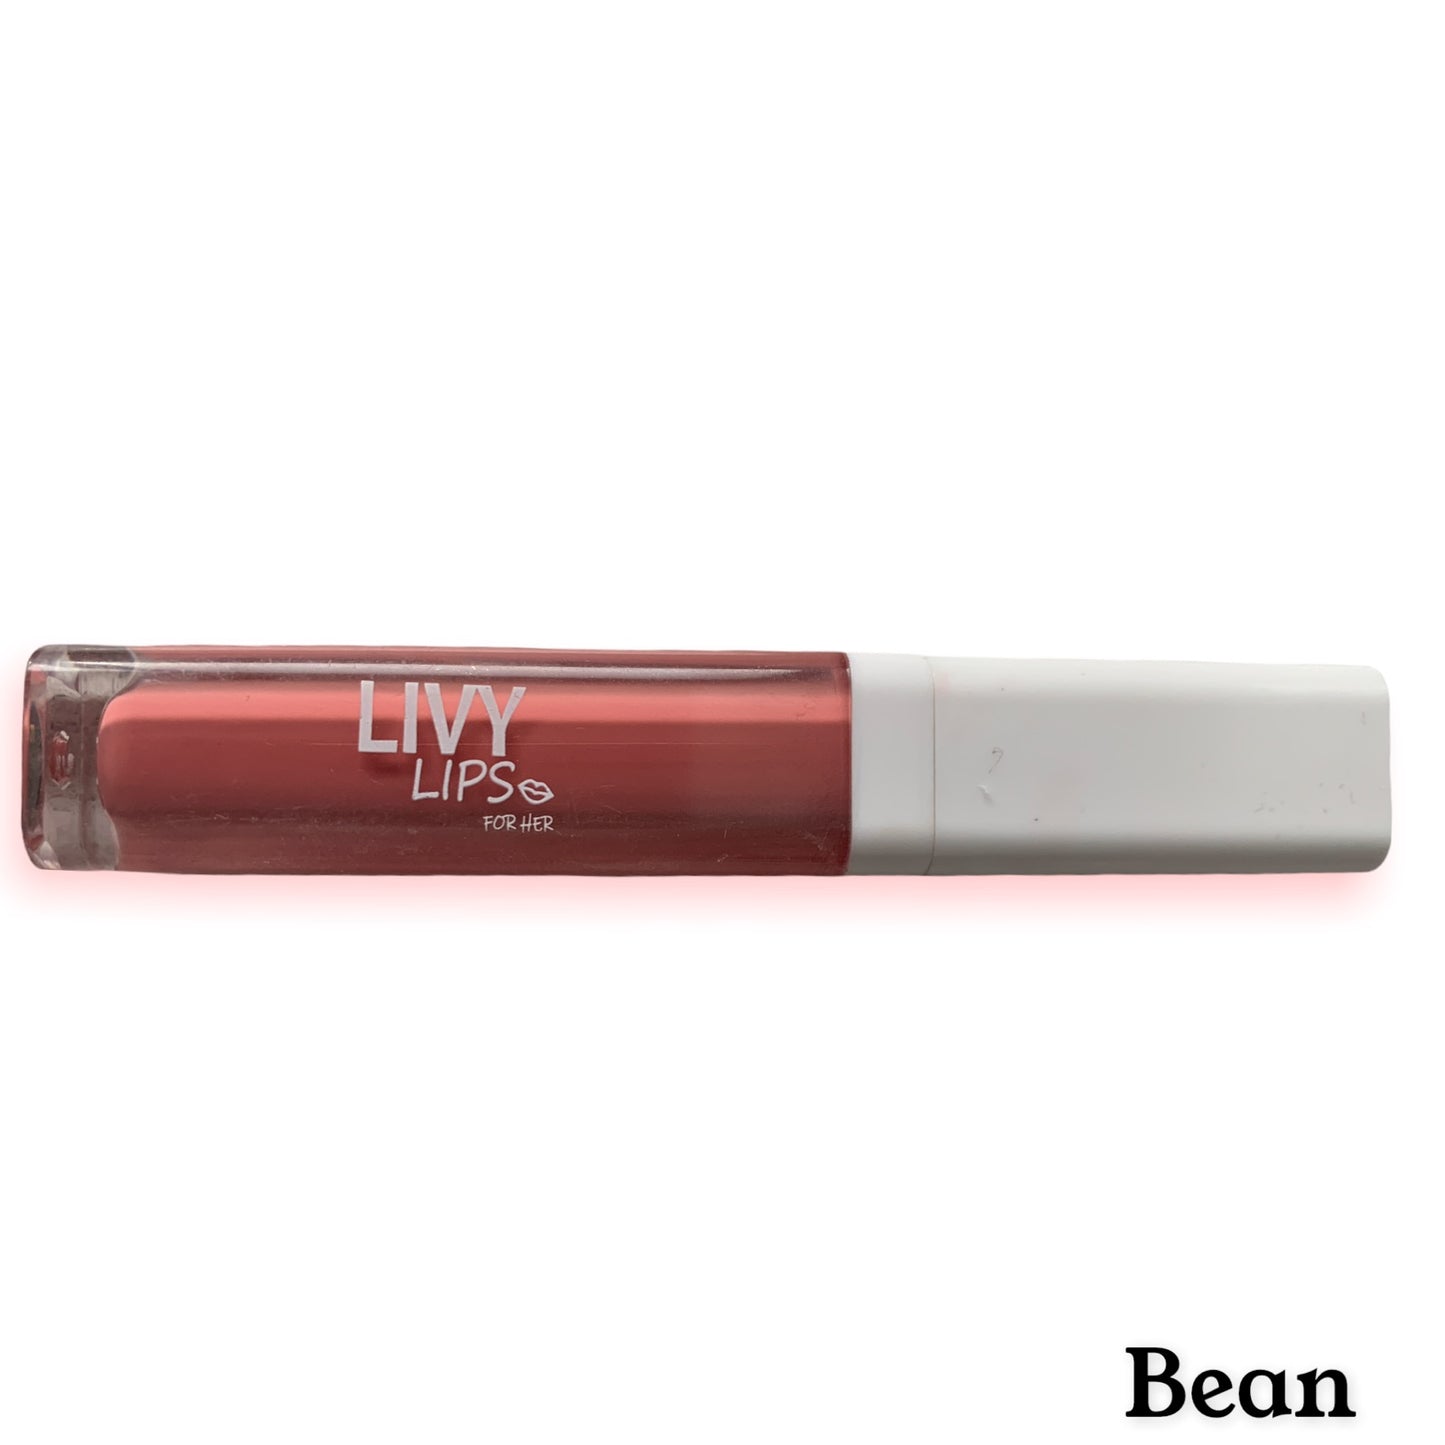 BEAN - Livy Lips Lipstick